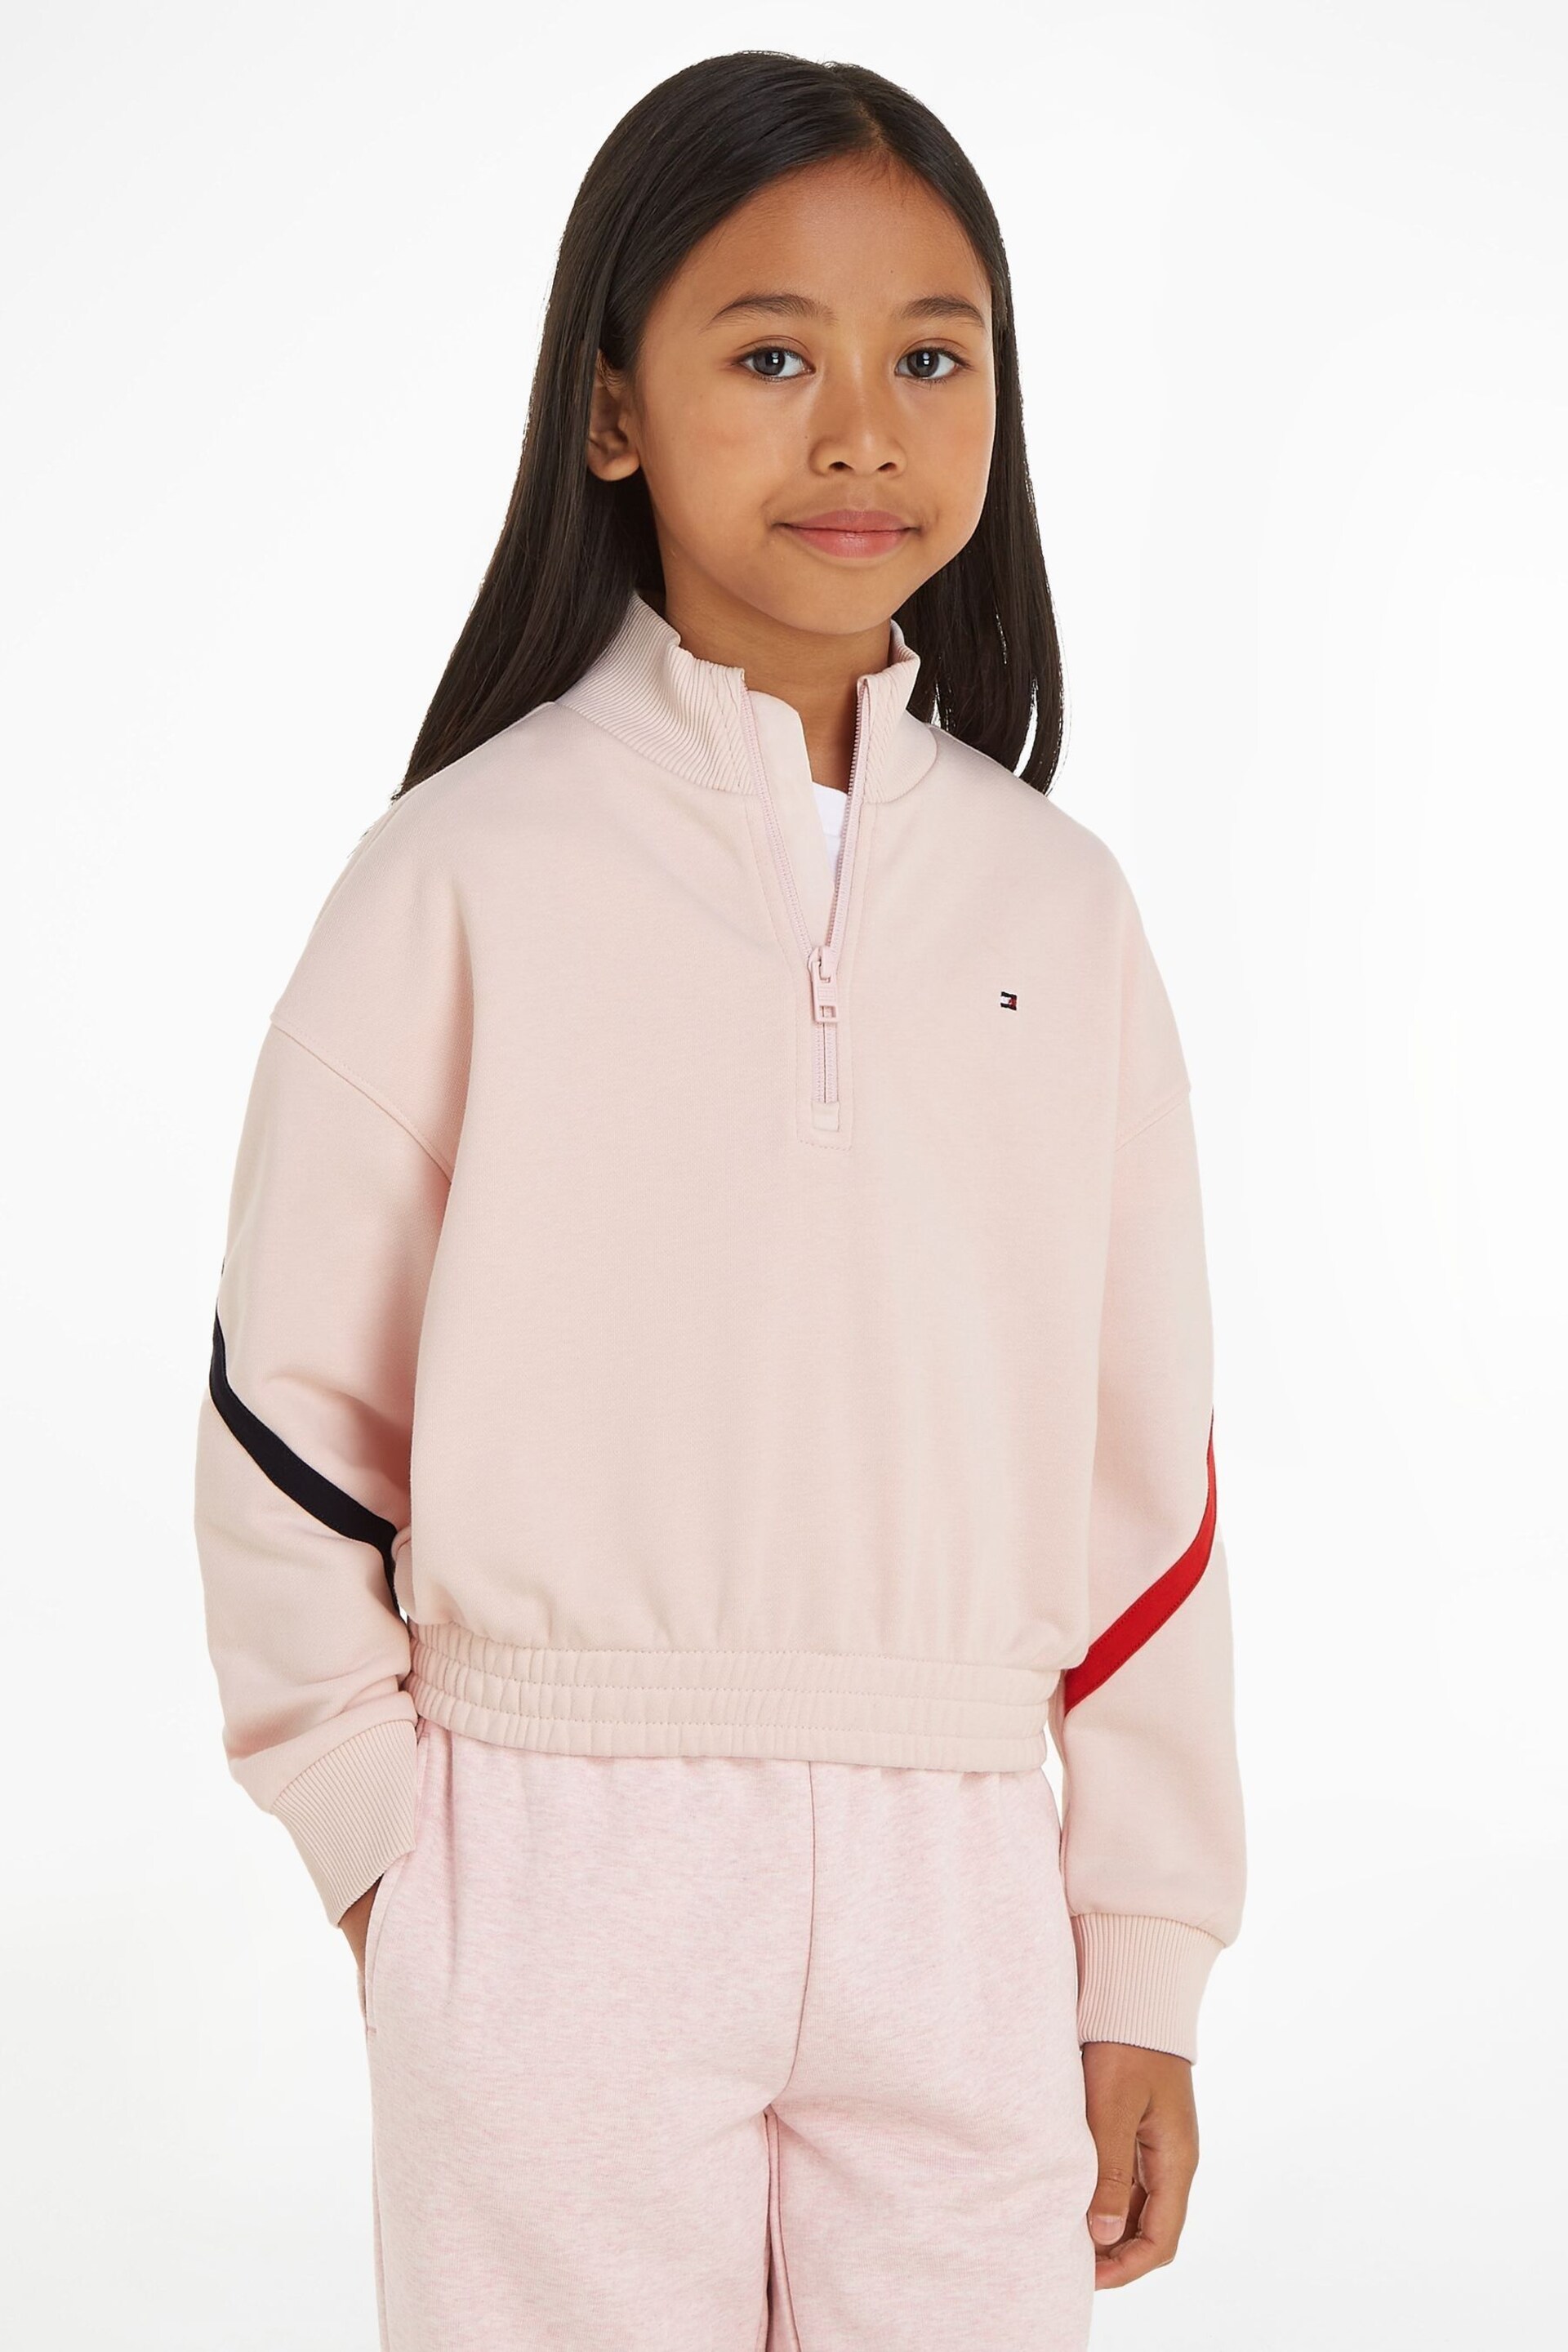 Tommy Hilfiger Pink Global Stripe Half Zip Sweater - Image 1 of 6